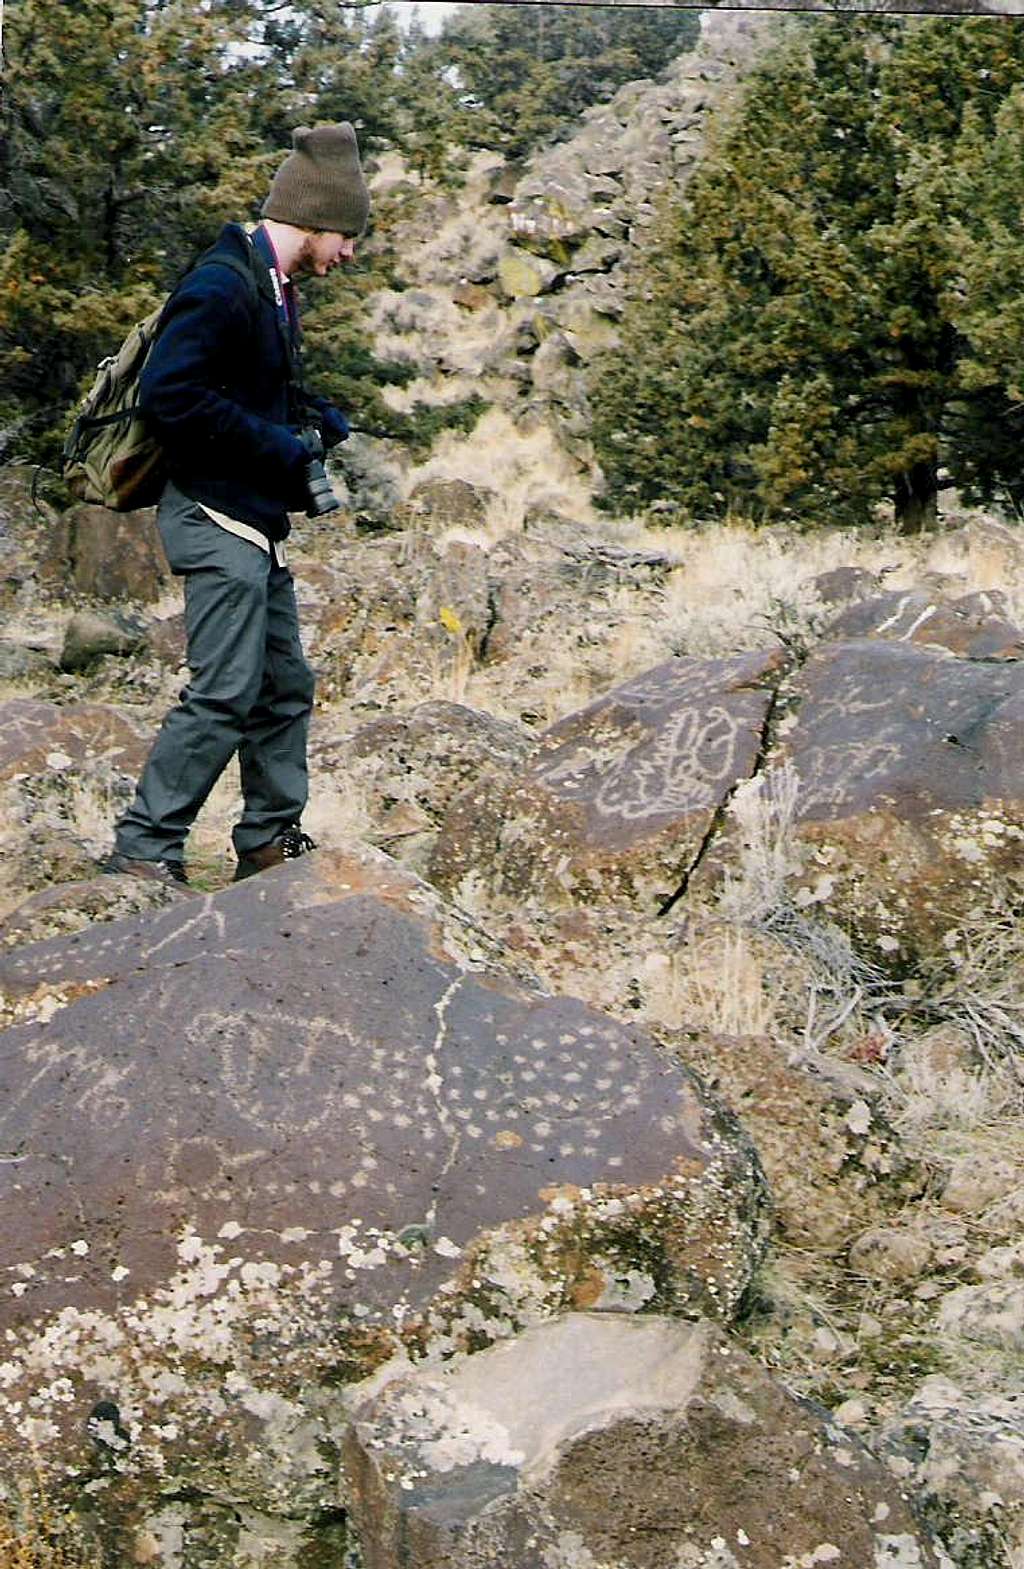 Petroglyphs near Burns, OR